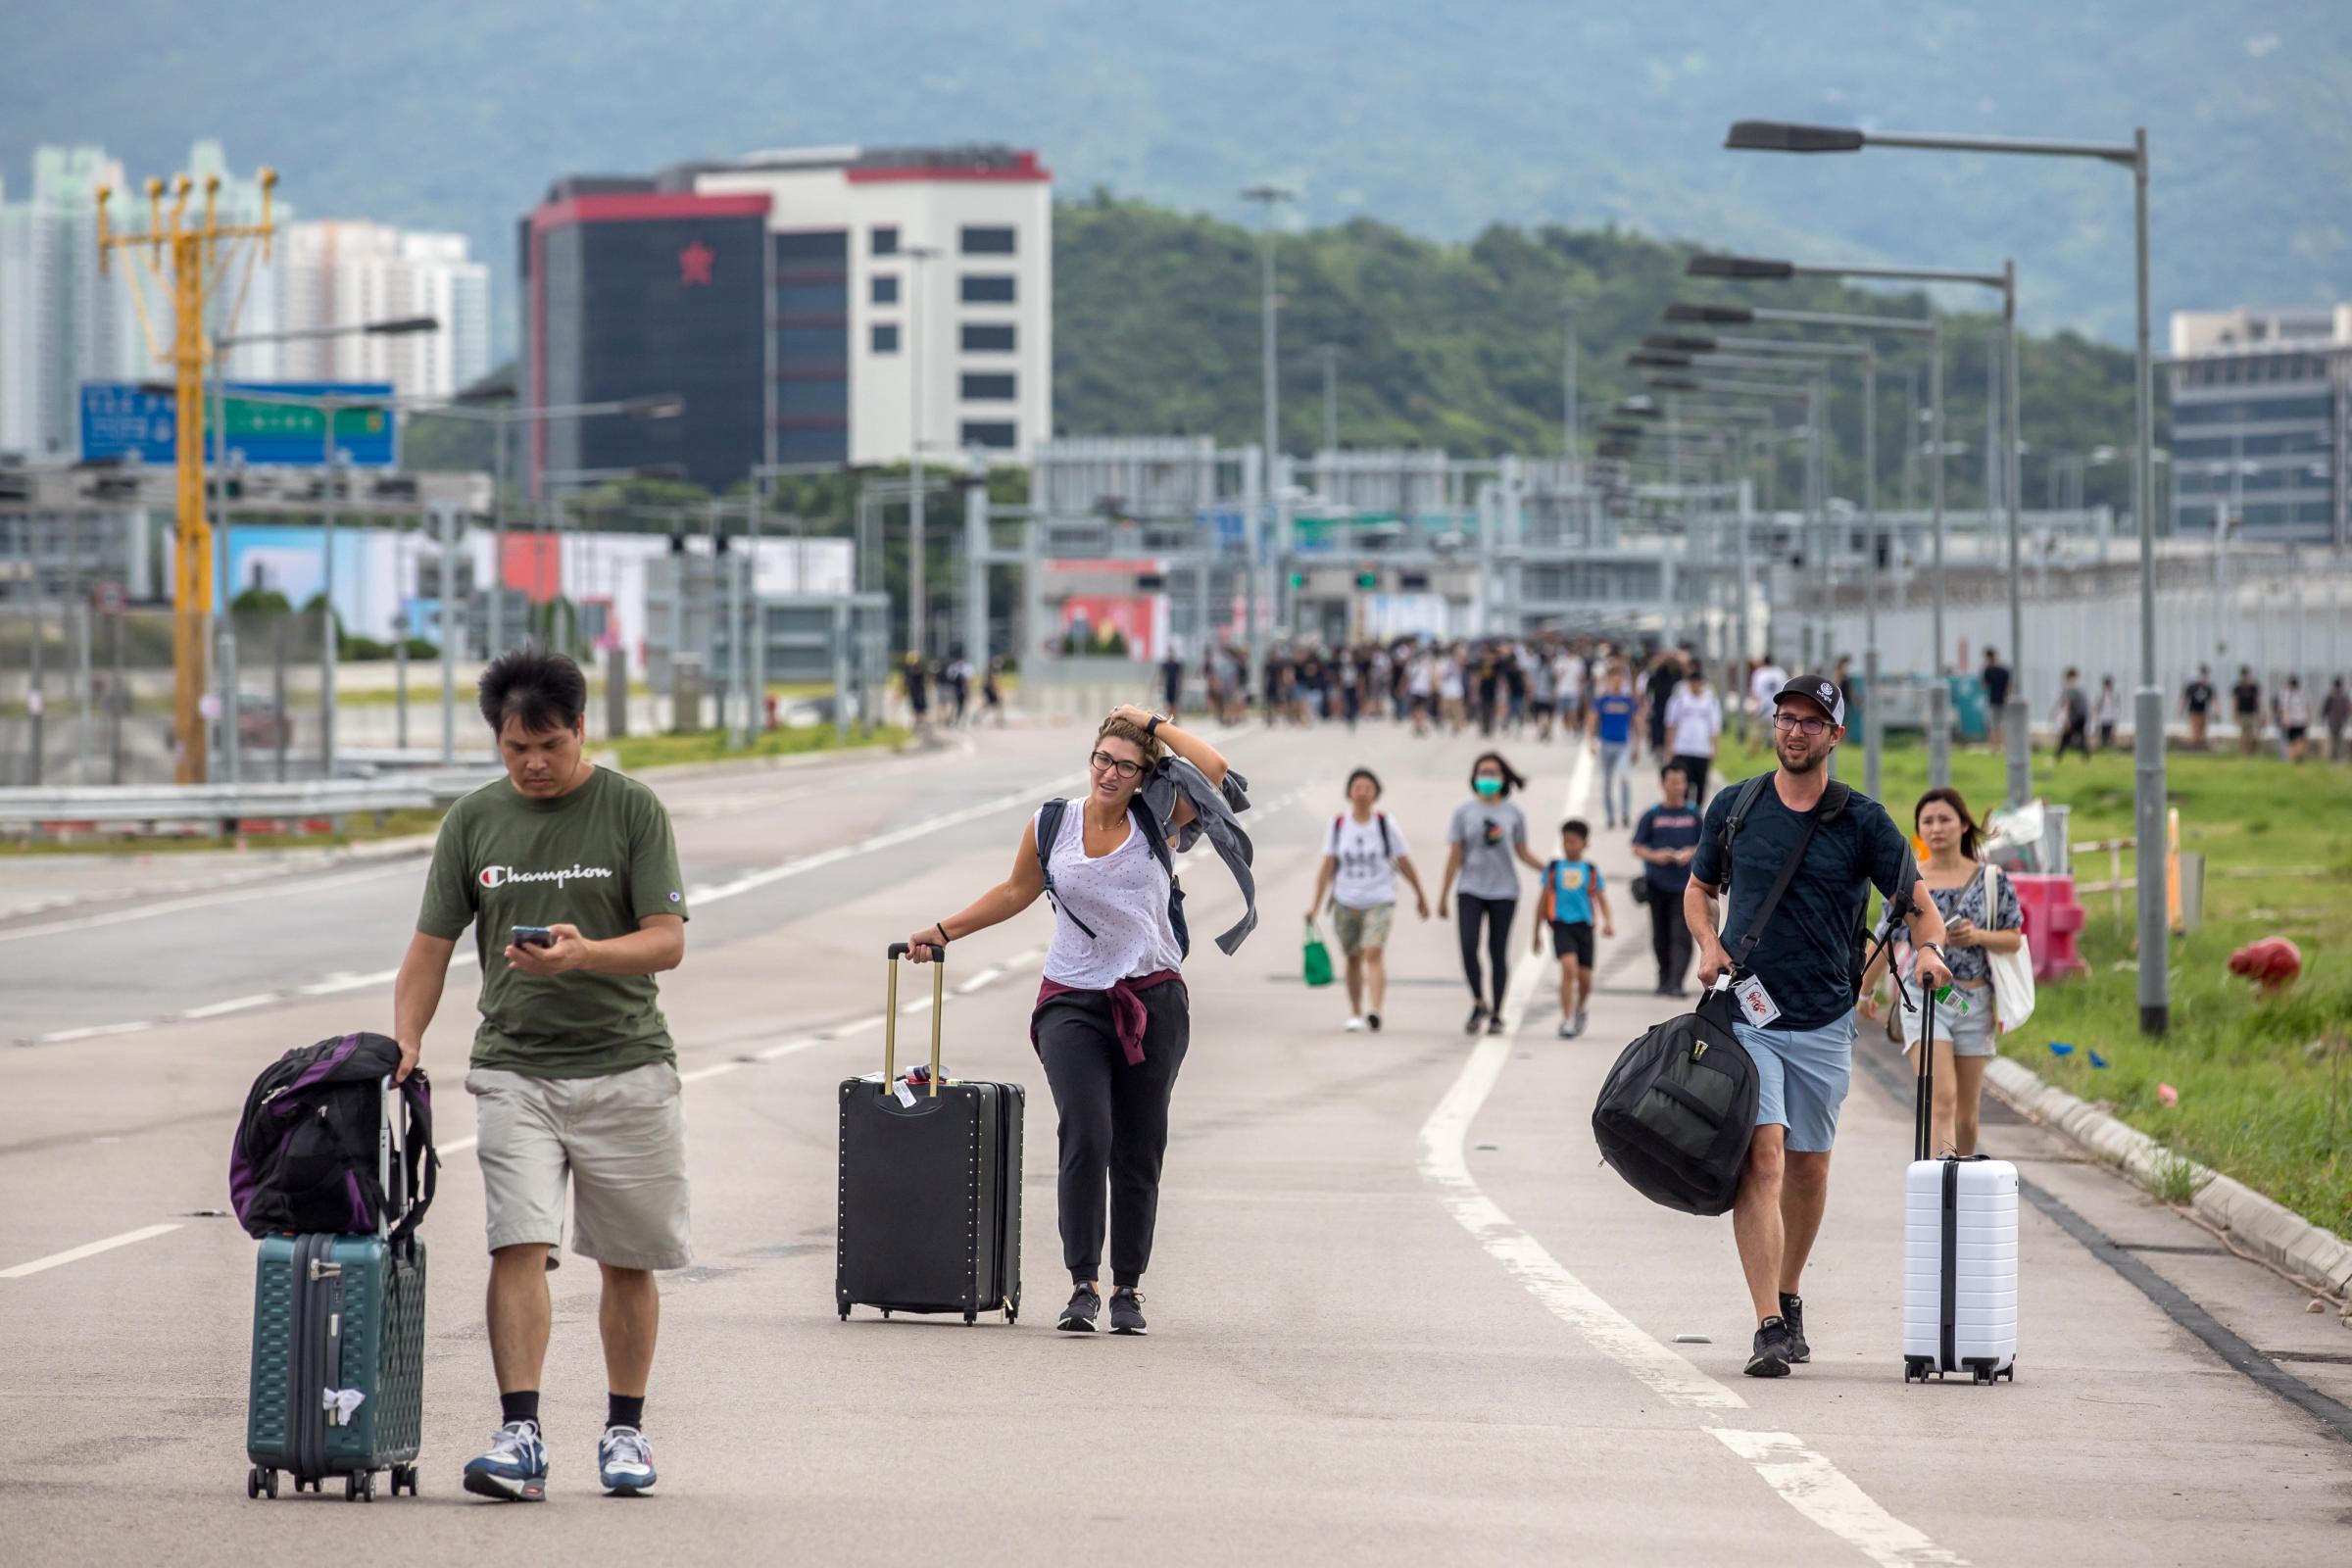 Hong Kong Demonstrators Swarm to Airport, Disrupting Transport